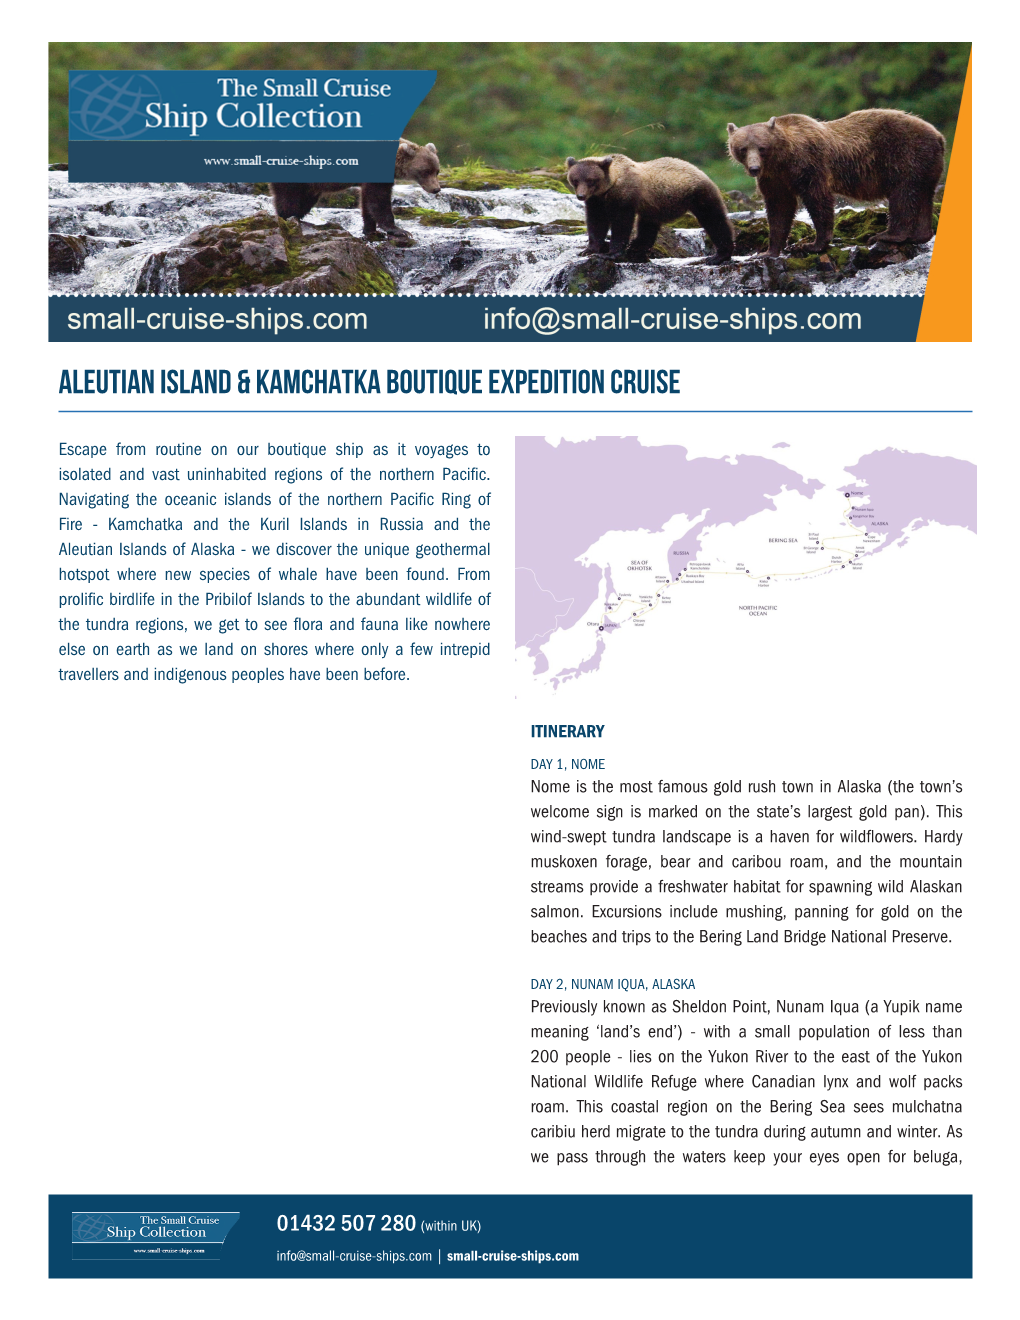 Aleutian Island & Kamchatka Boutique Expedition Cruise